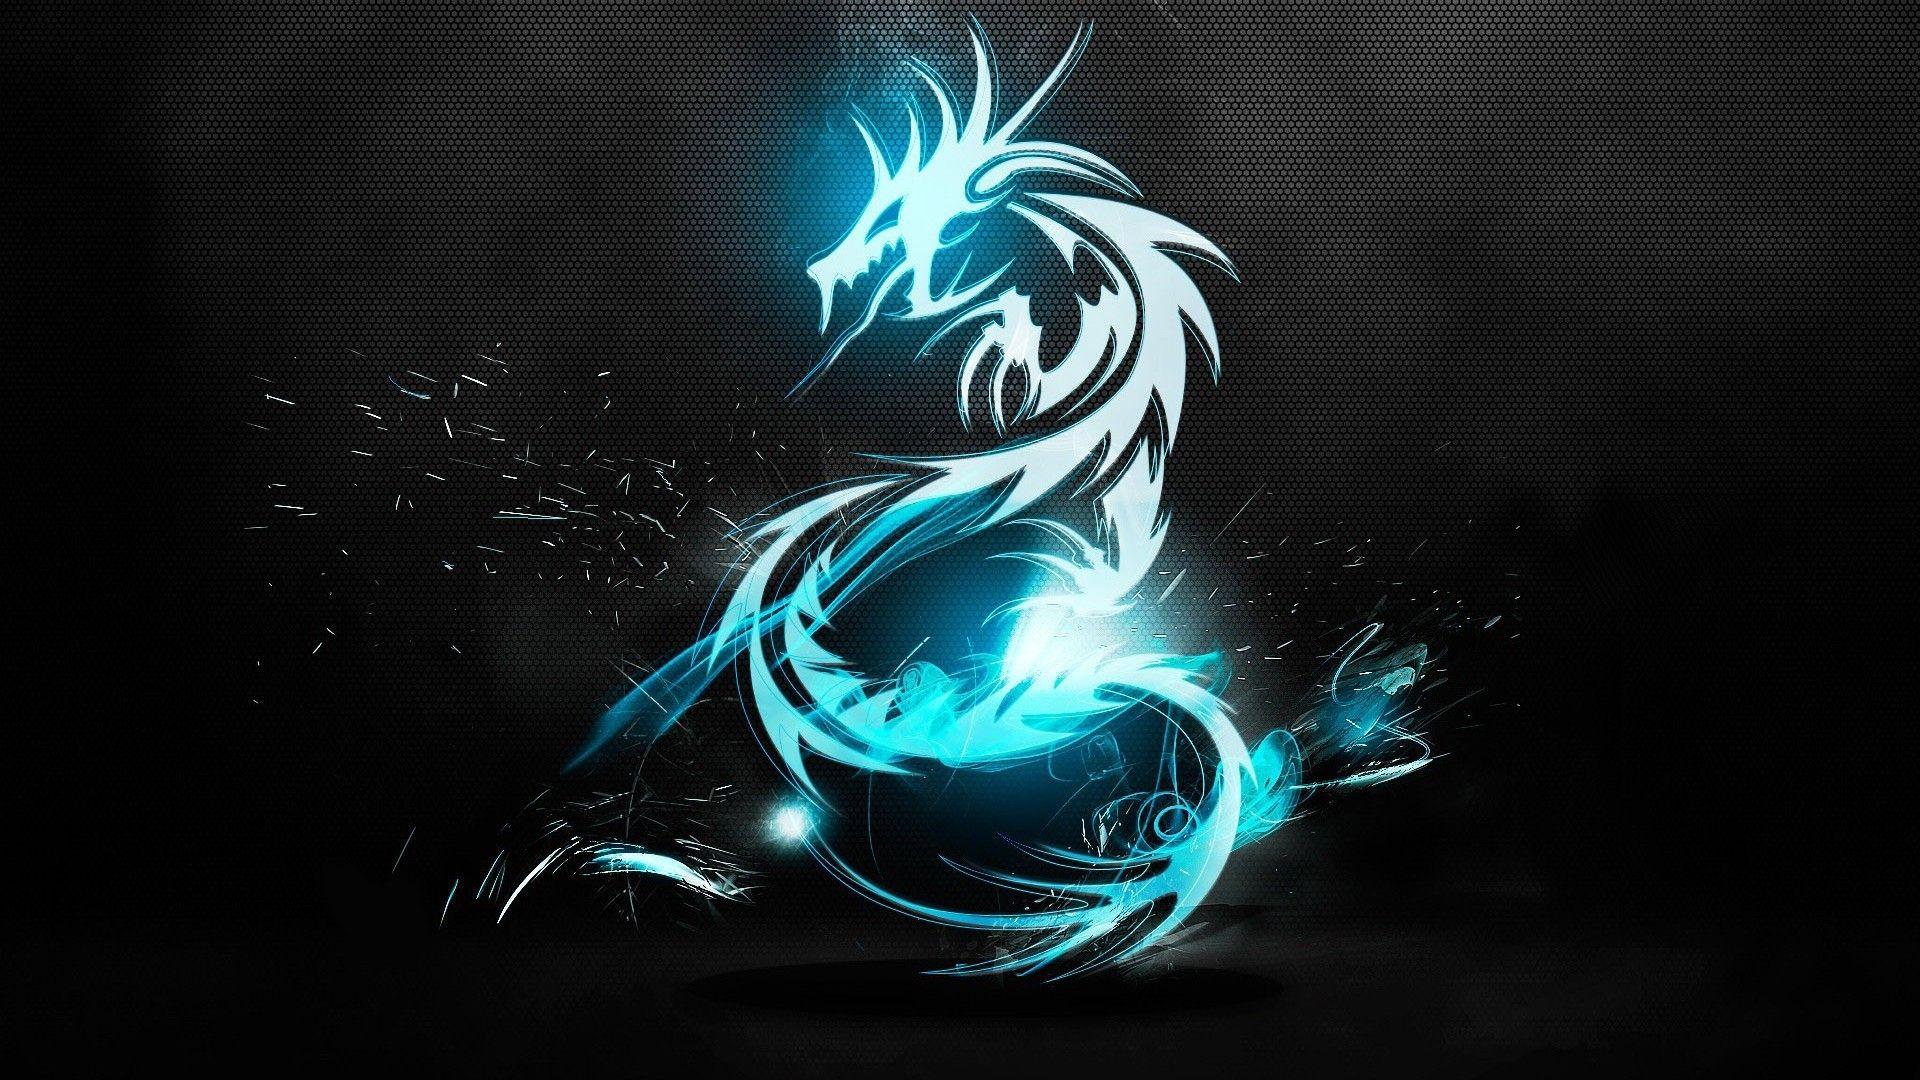 Cool Ice Dragon Logo - wallpaper.wiki-Ice-Dragon-Images-PIC-WPE003618 | wallpaper.wiki